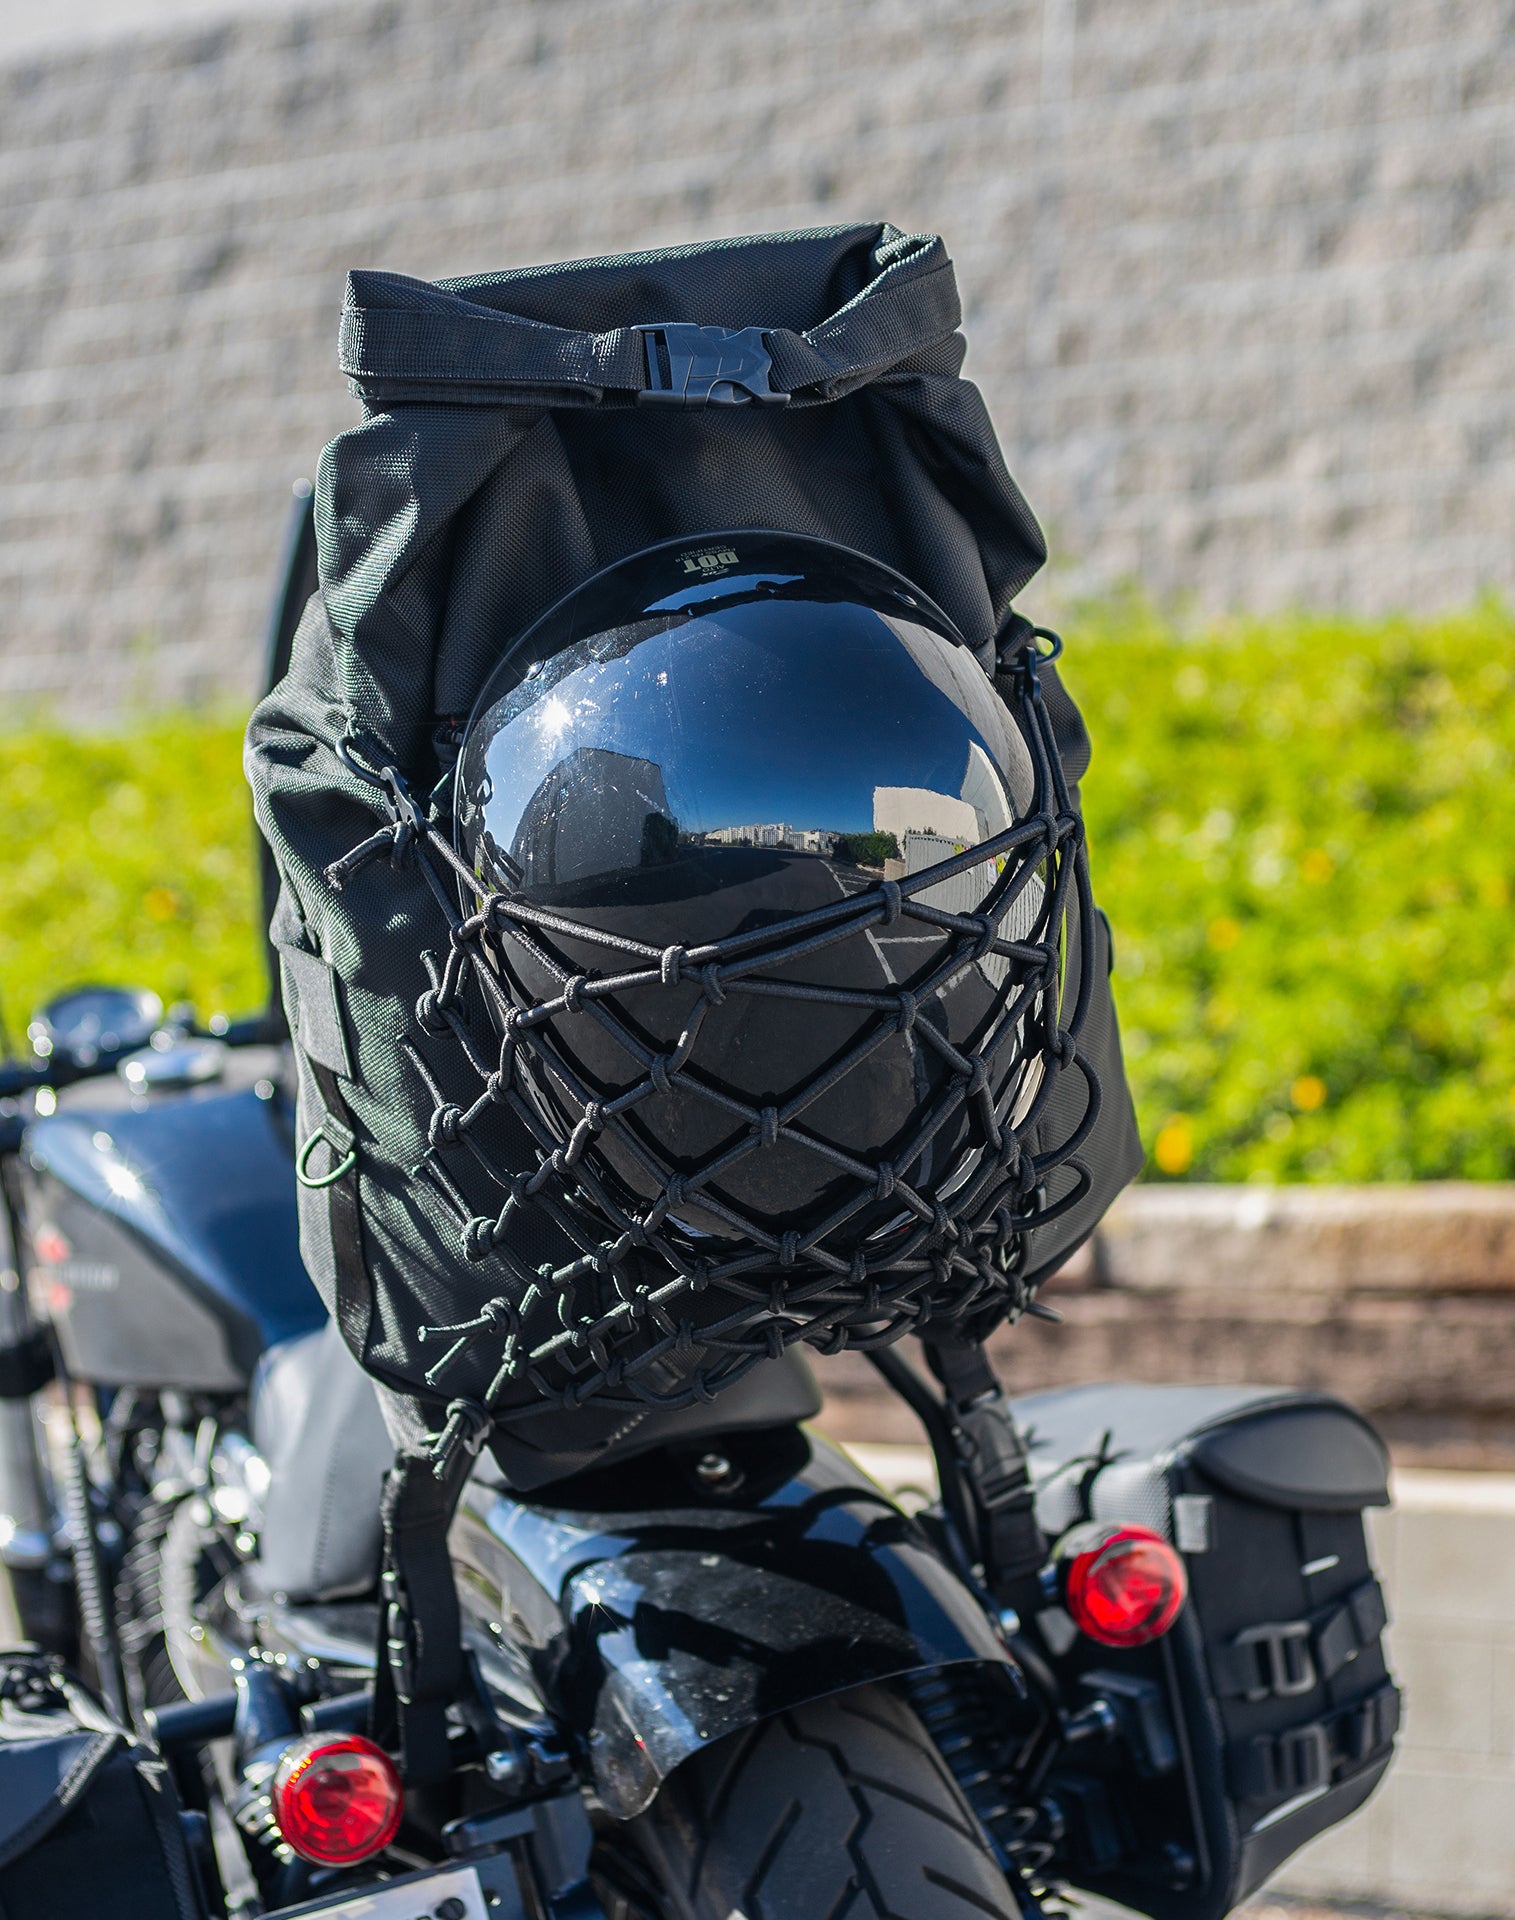 32L - Vanguard Large Dry Harley Davidson Motorcycle Tail Bag